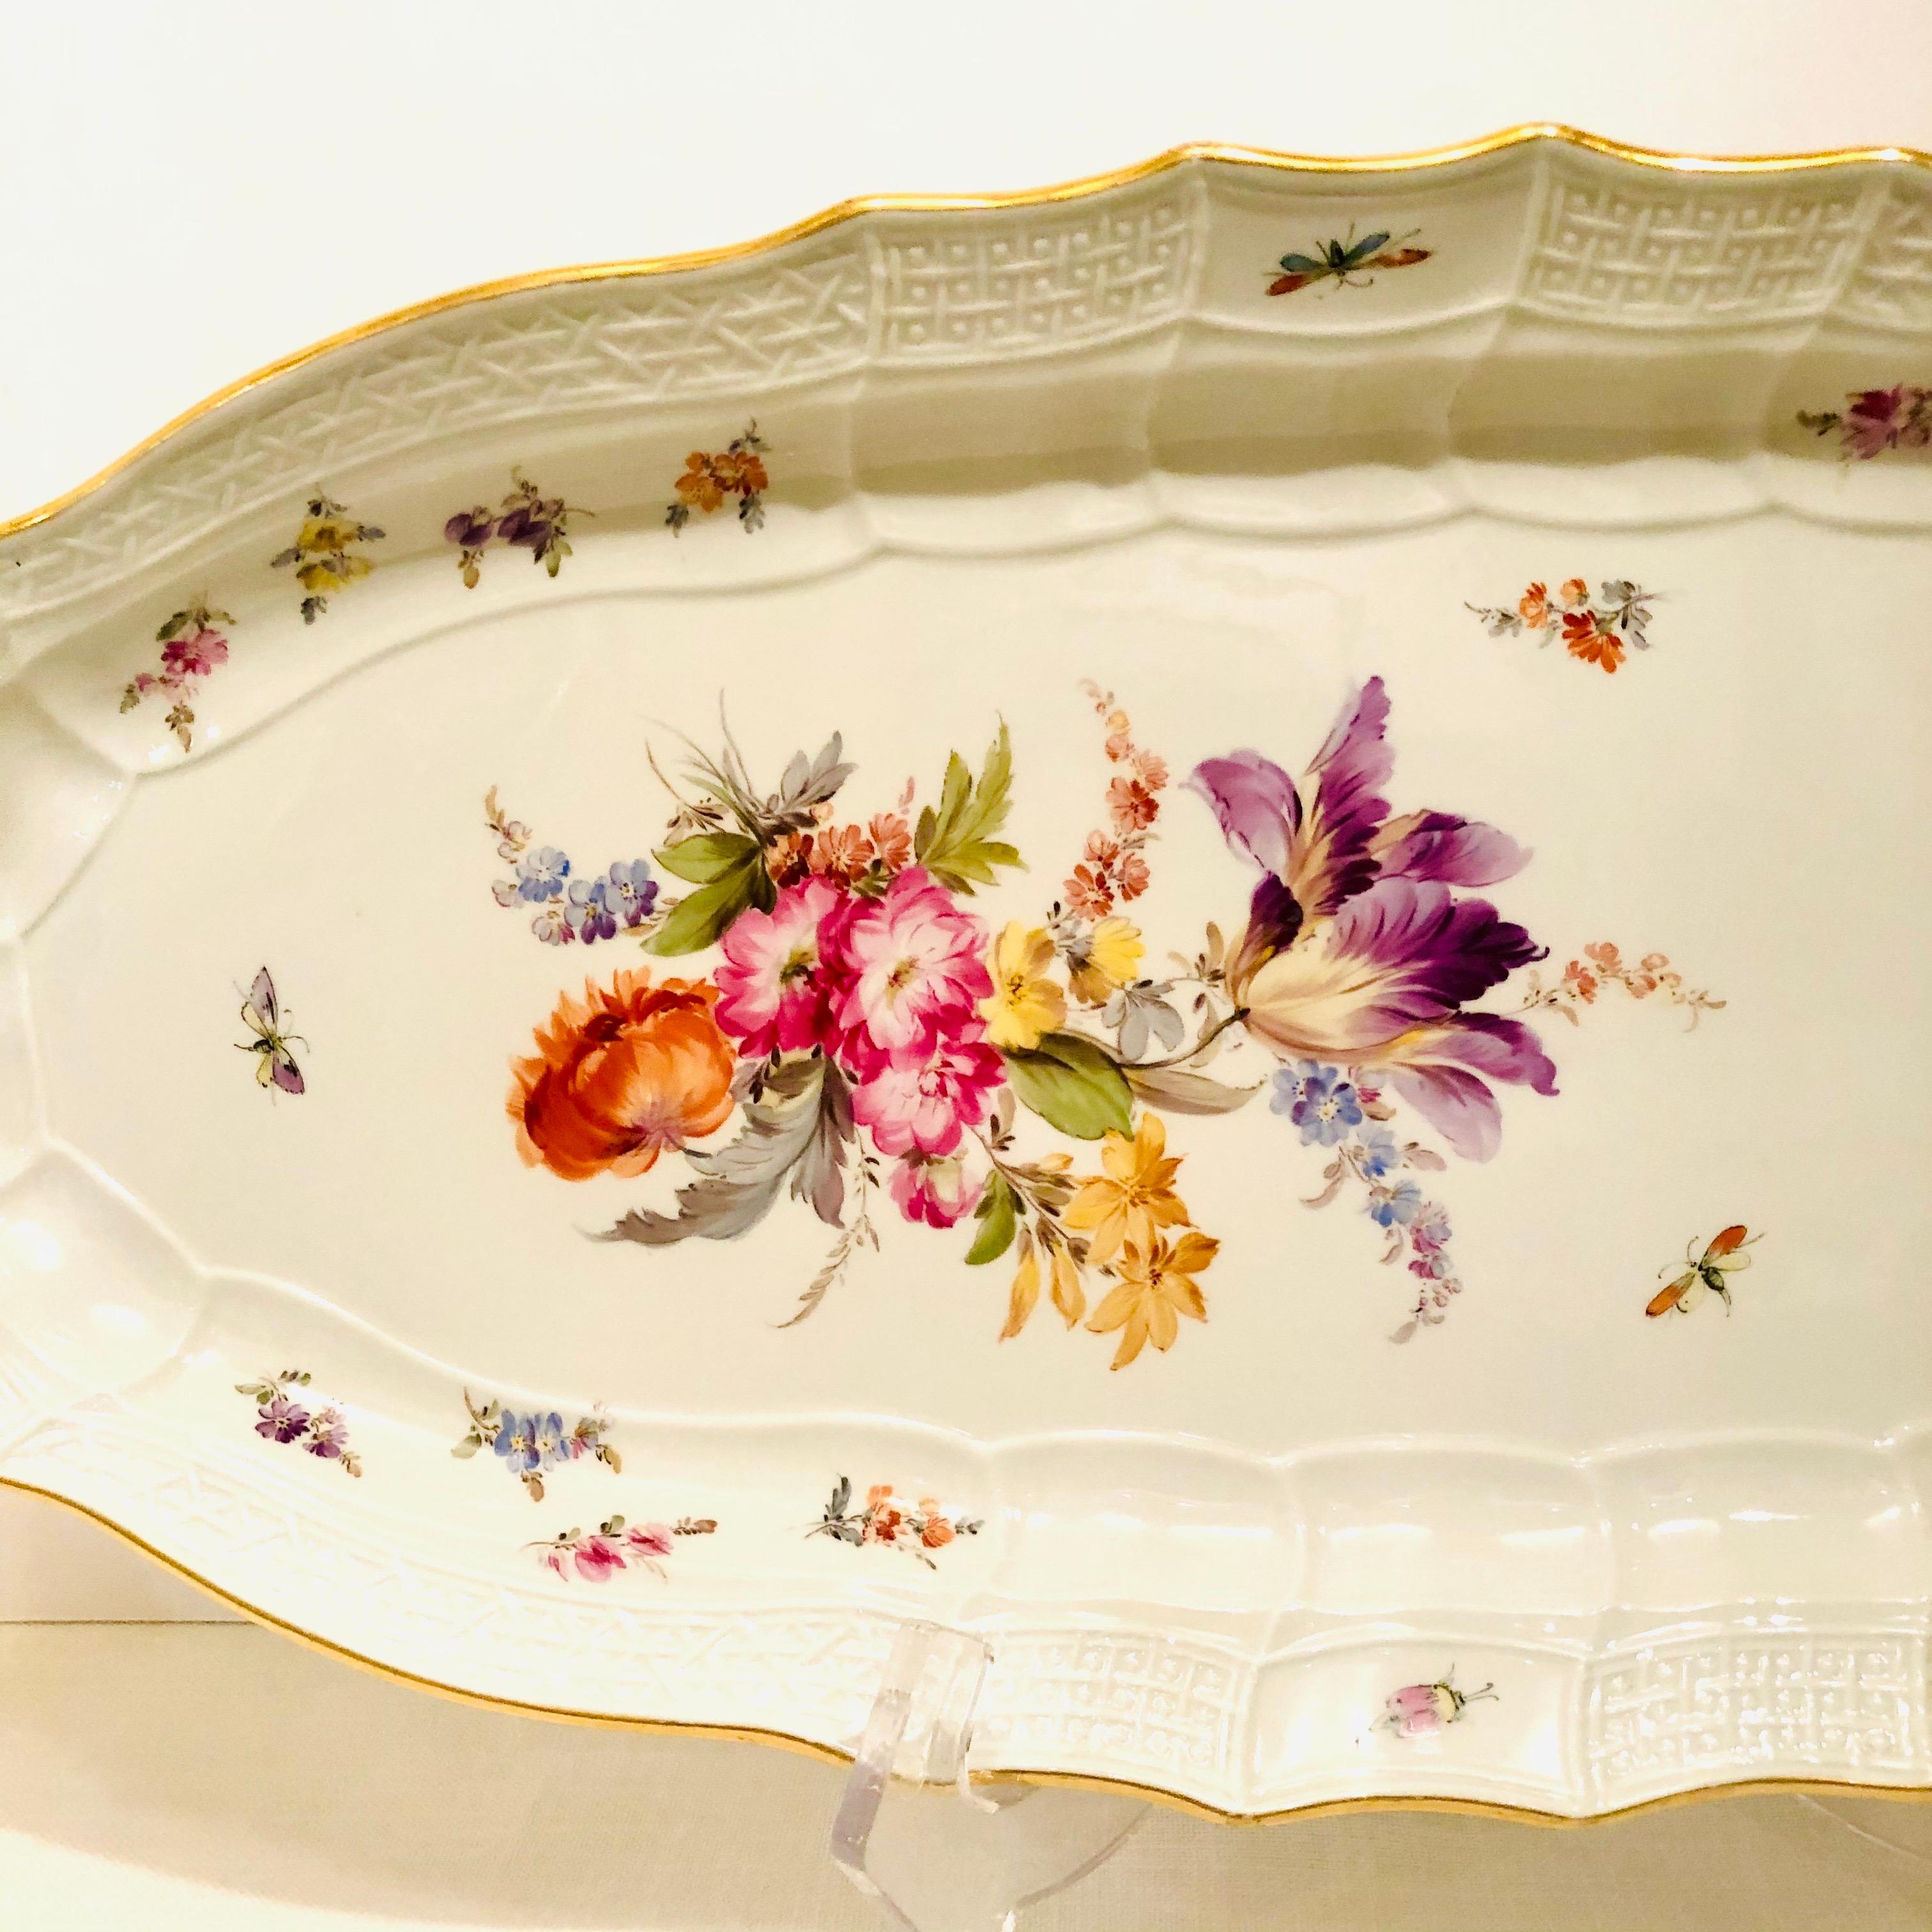 Romantic Antique Meissen Fish Platter with a Bouquet of Flowers Including a Purple Tulip